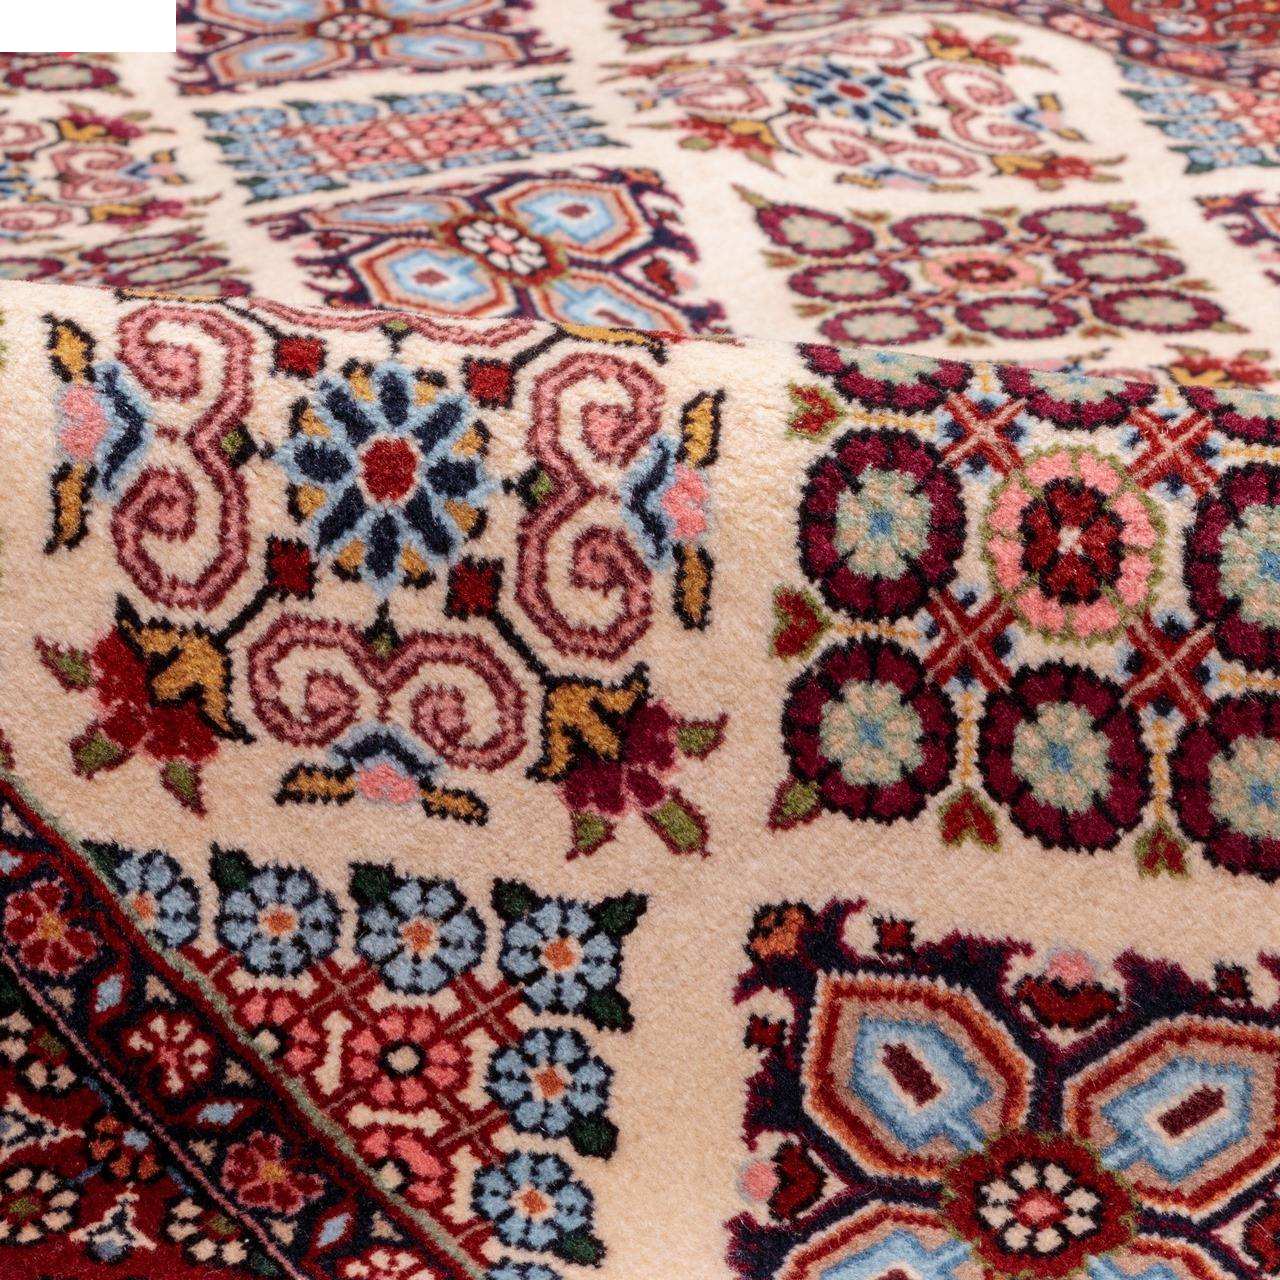 C Persia three meter handmade carpet code 174558